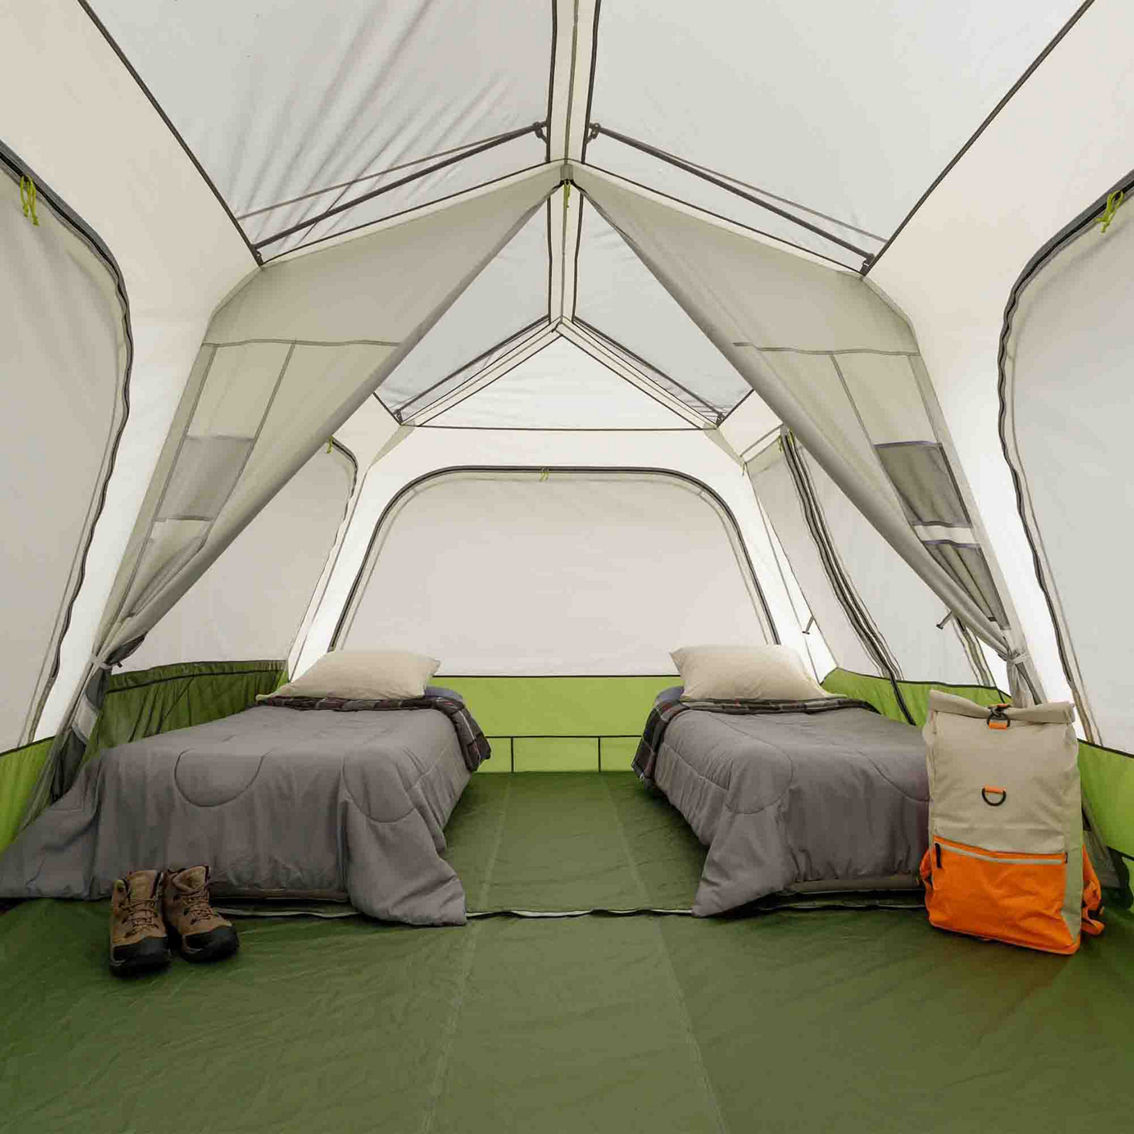 Core Equipment 10 Person Cabin Tent - Image 3 of 4